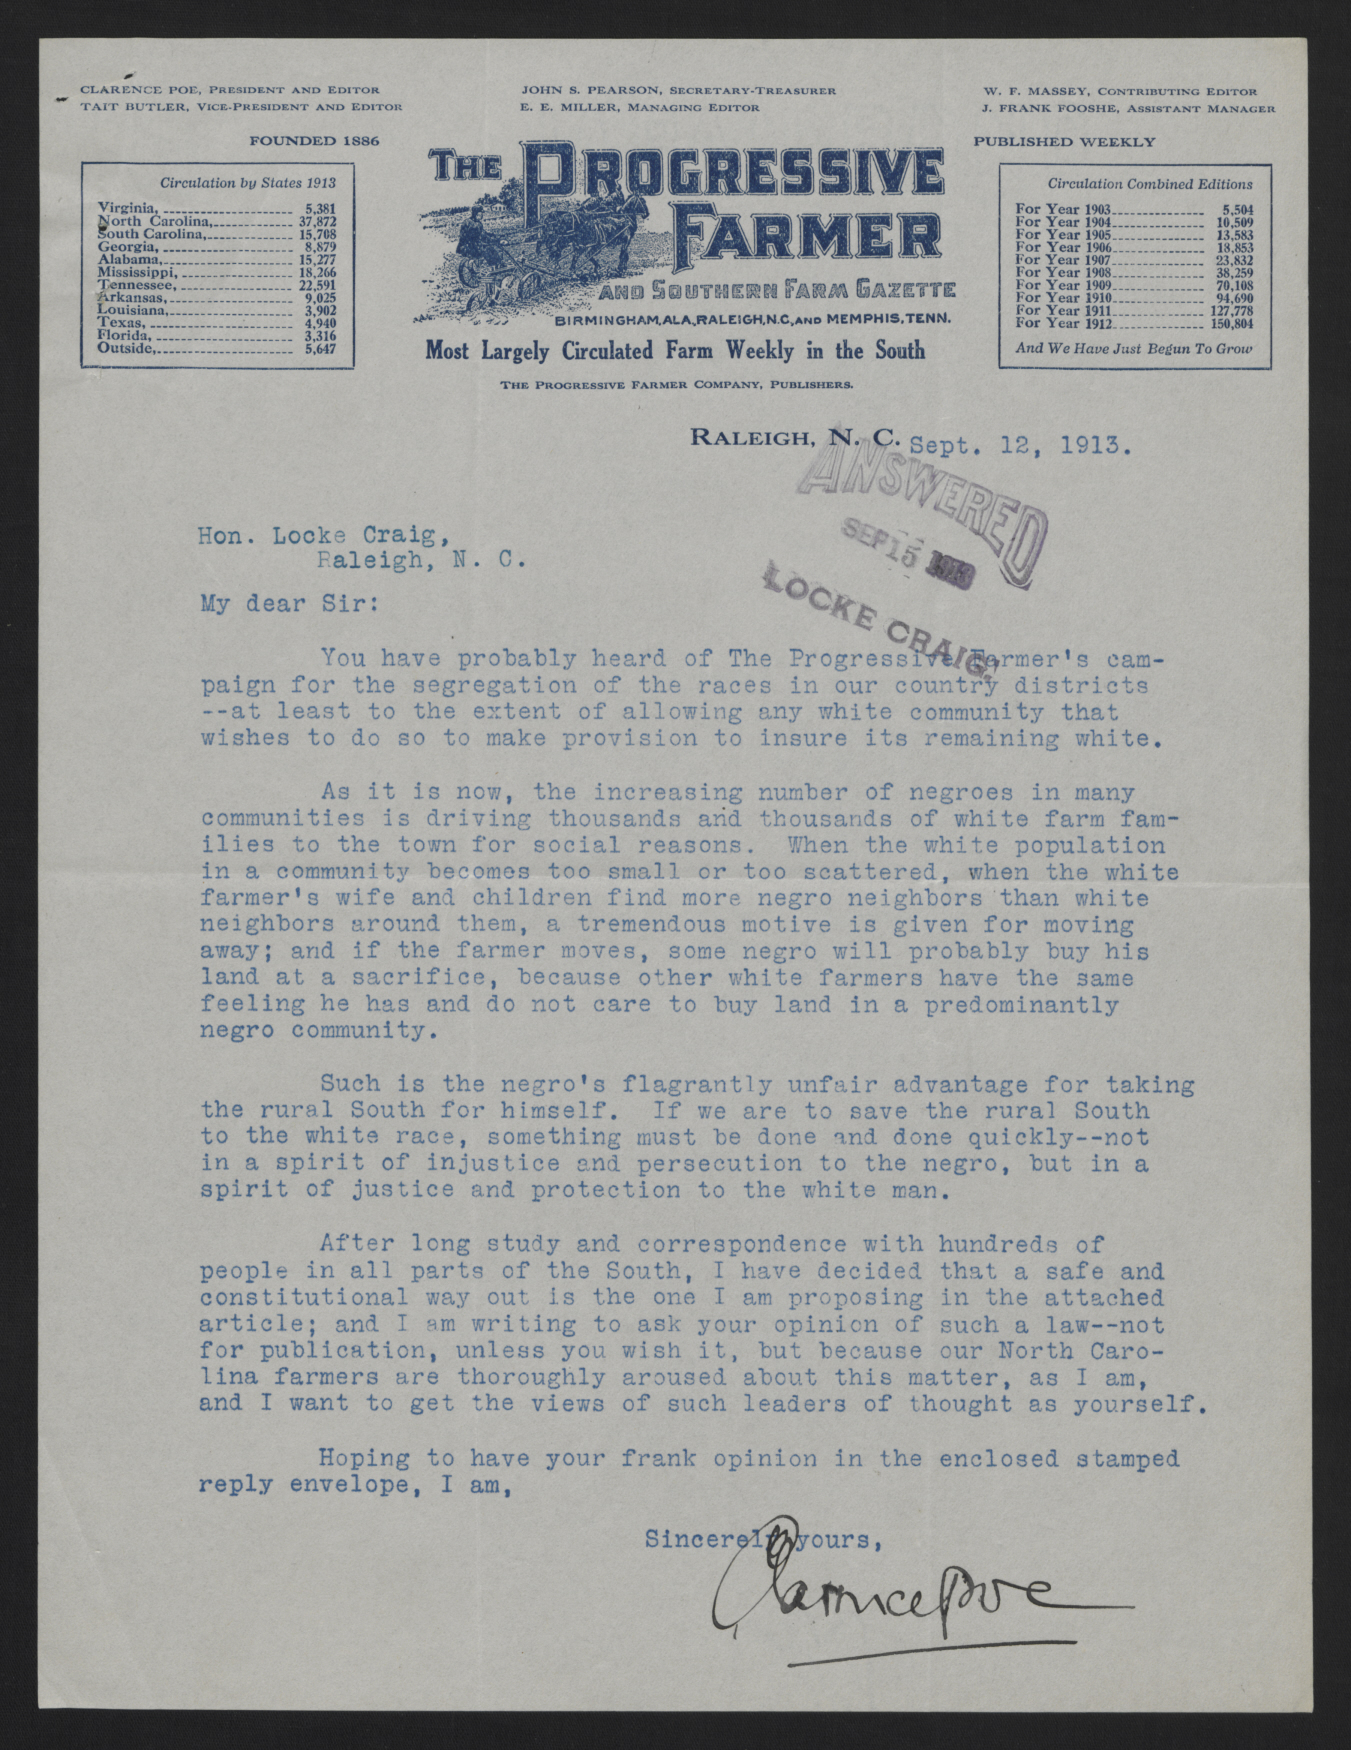 Letter from Poe to Craig, September 12, 1913